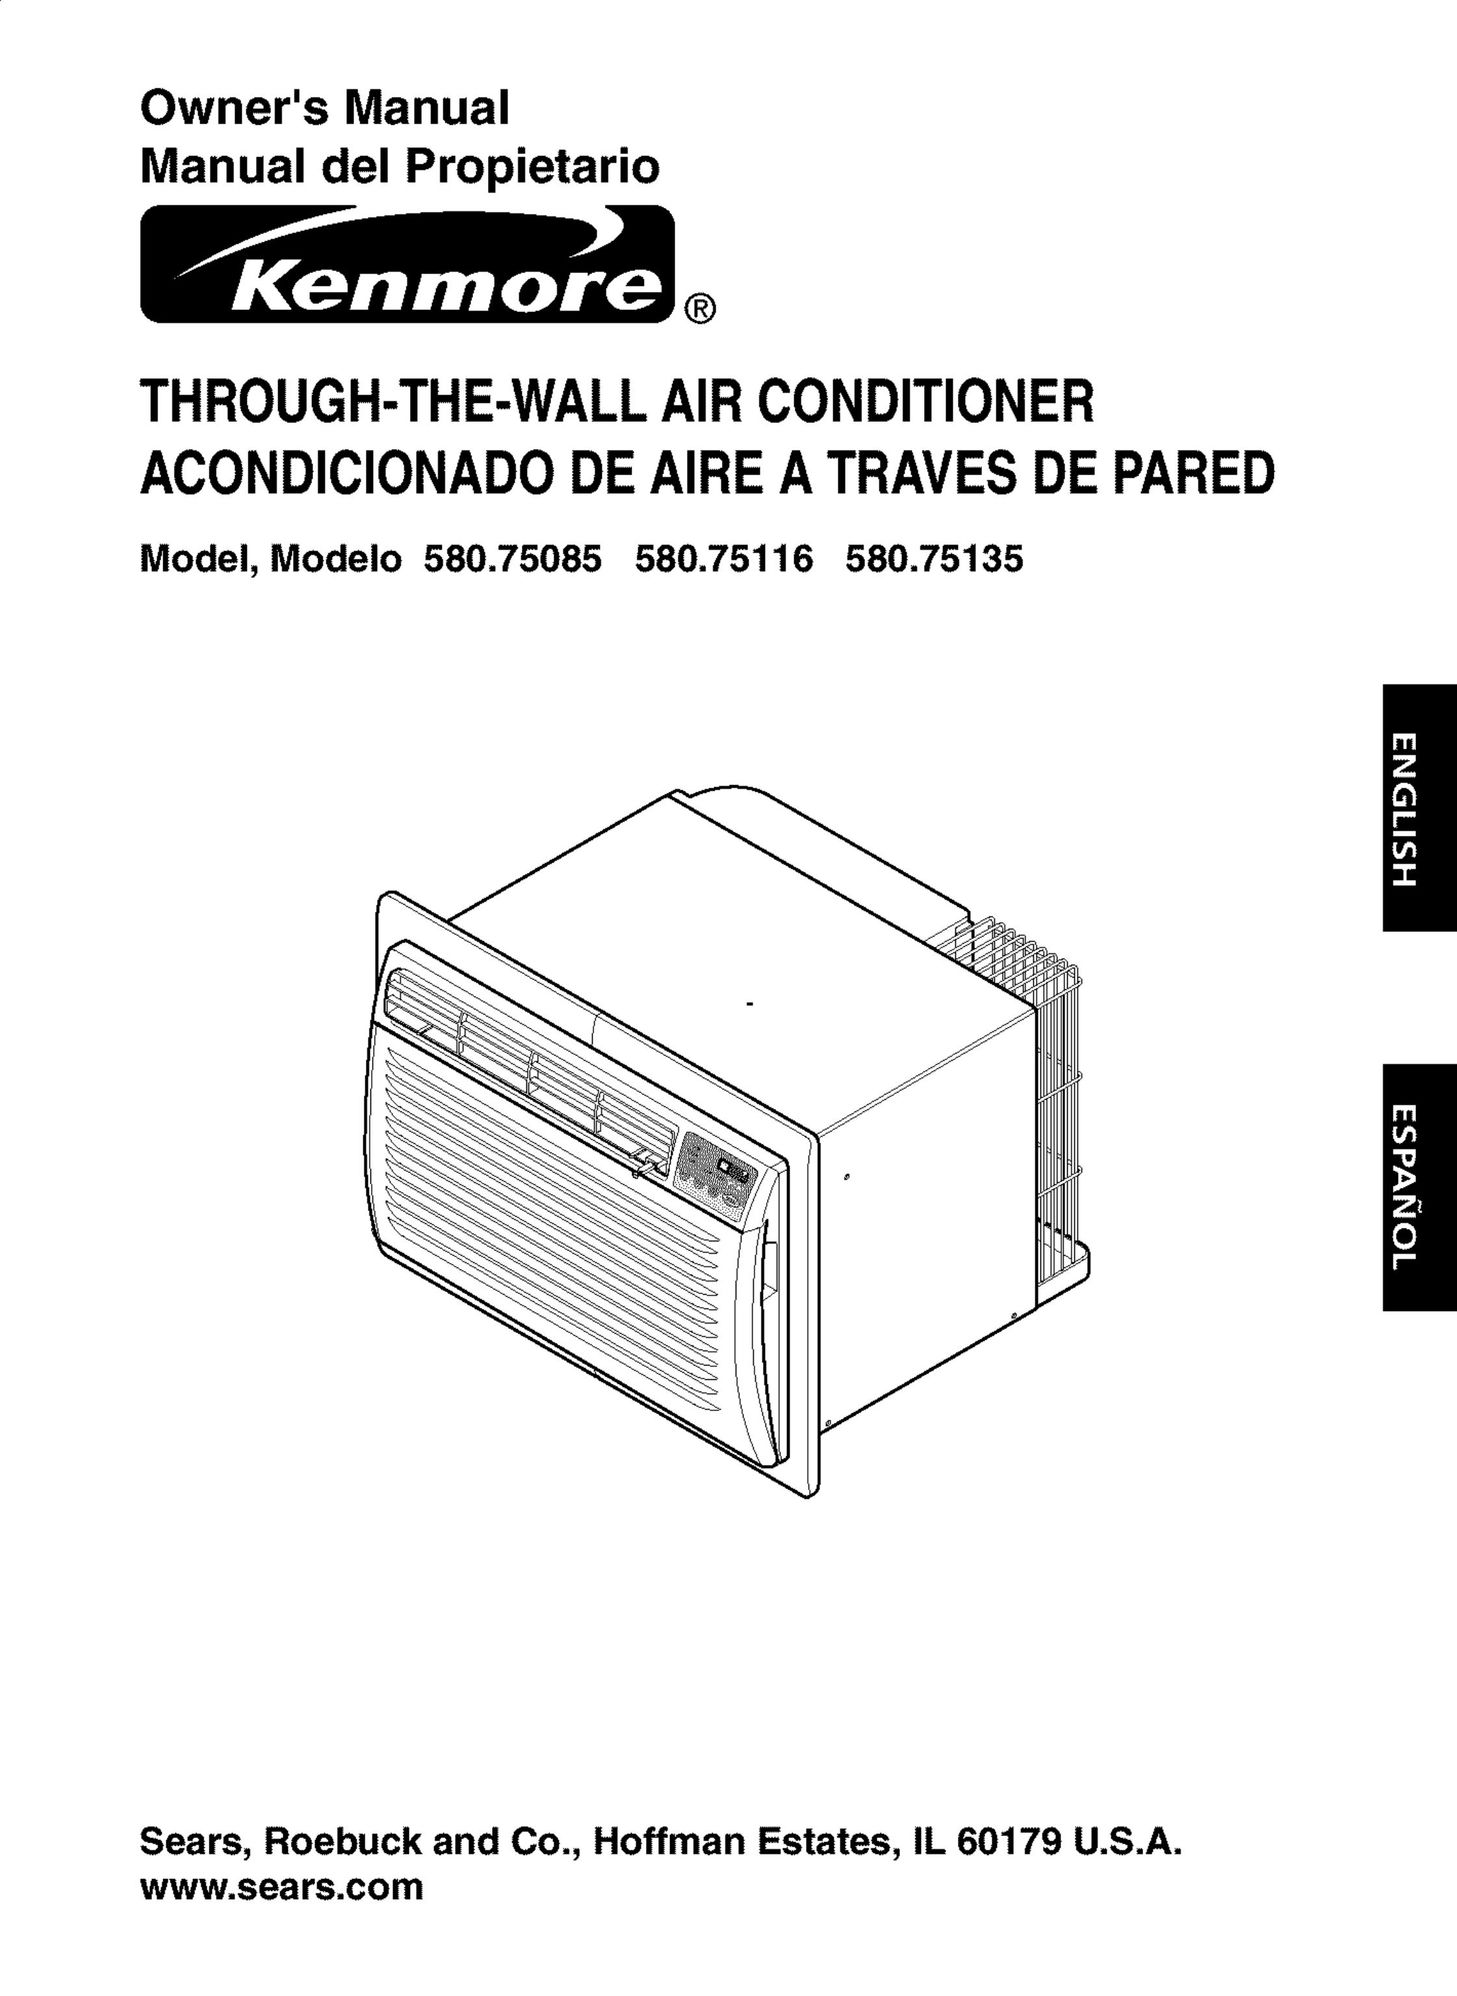 Kenmore 580.75135 Air Conditioner User Manual